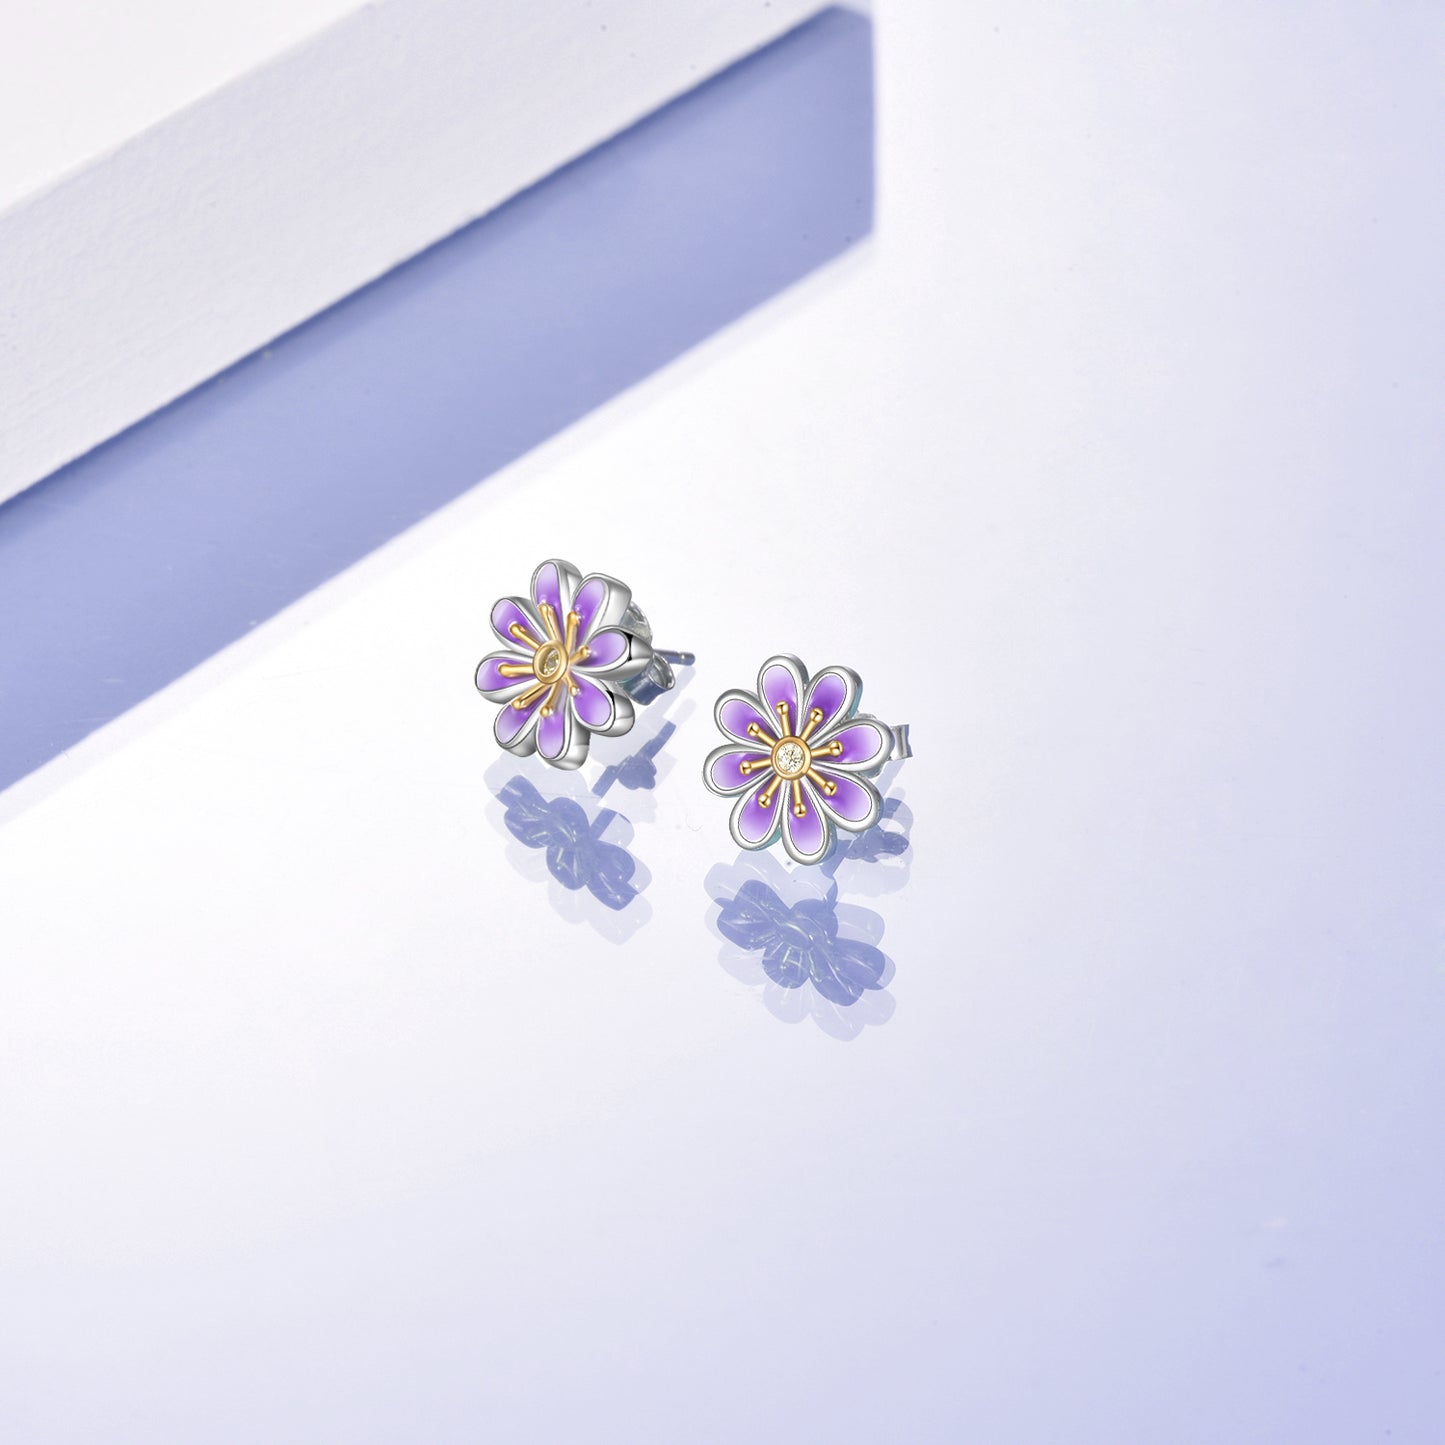 YFN Sterling Silver Small Purple Daisy Flower Stud Earrings (Gift box included)